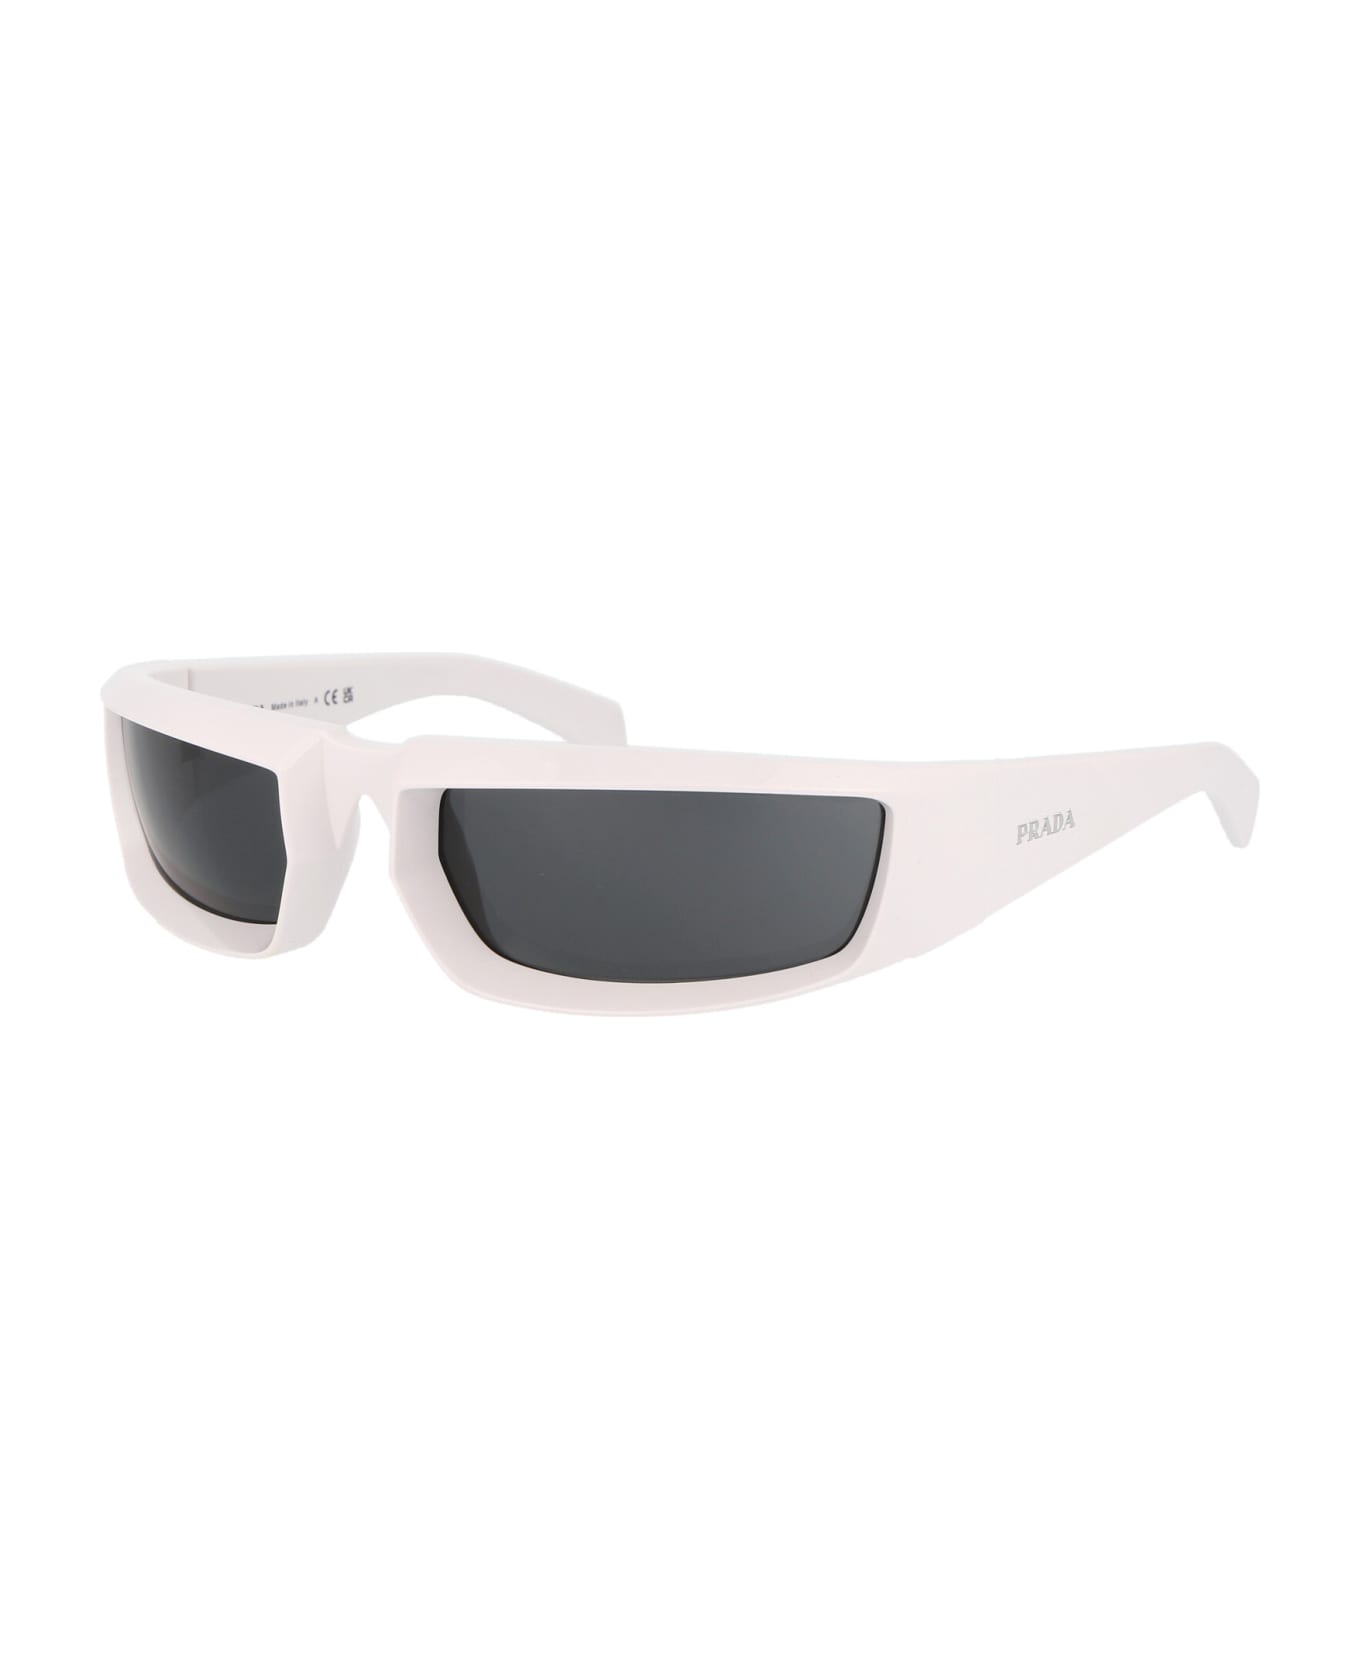 Prada Eyewear 0pr 25ys Sunglasses - 4615S0 White